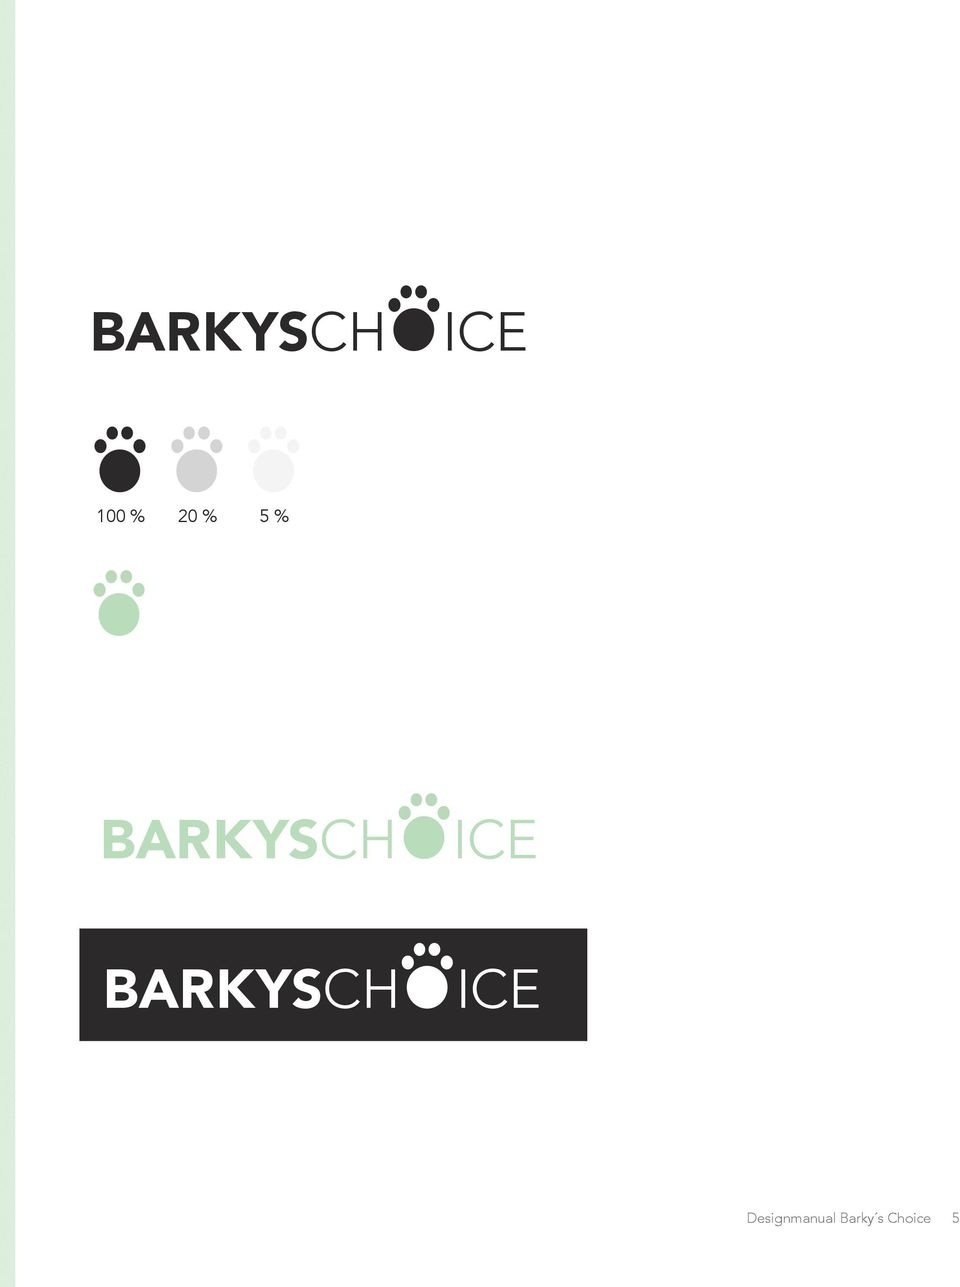 barkysch ice ice